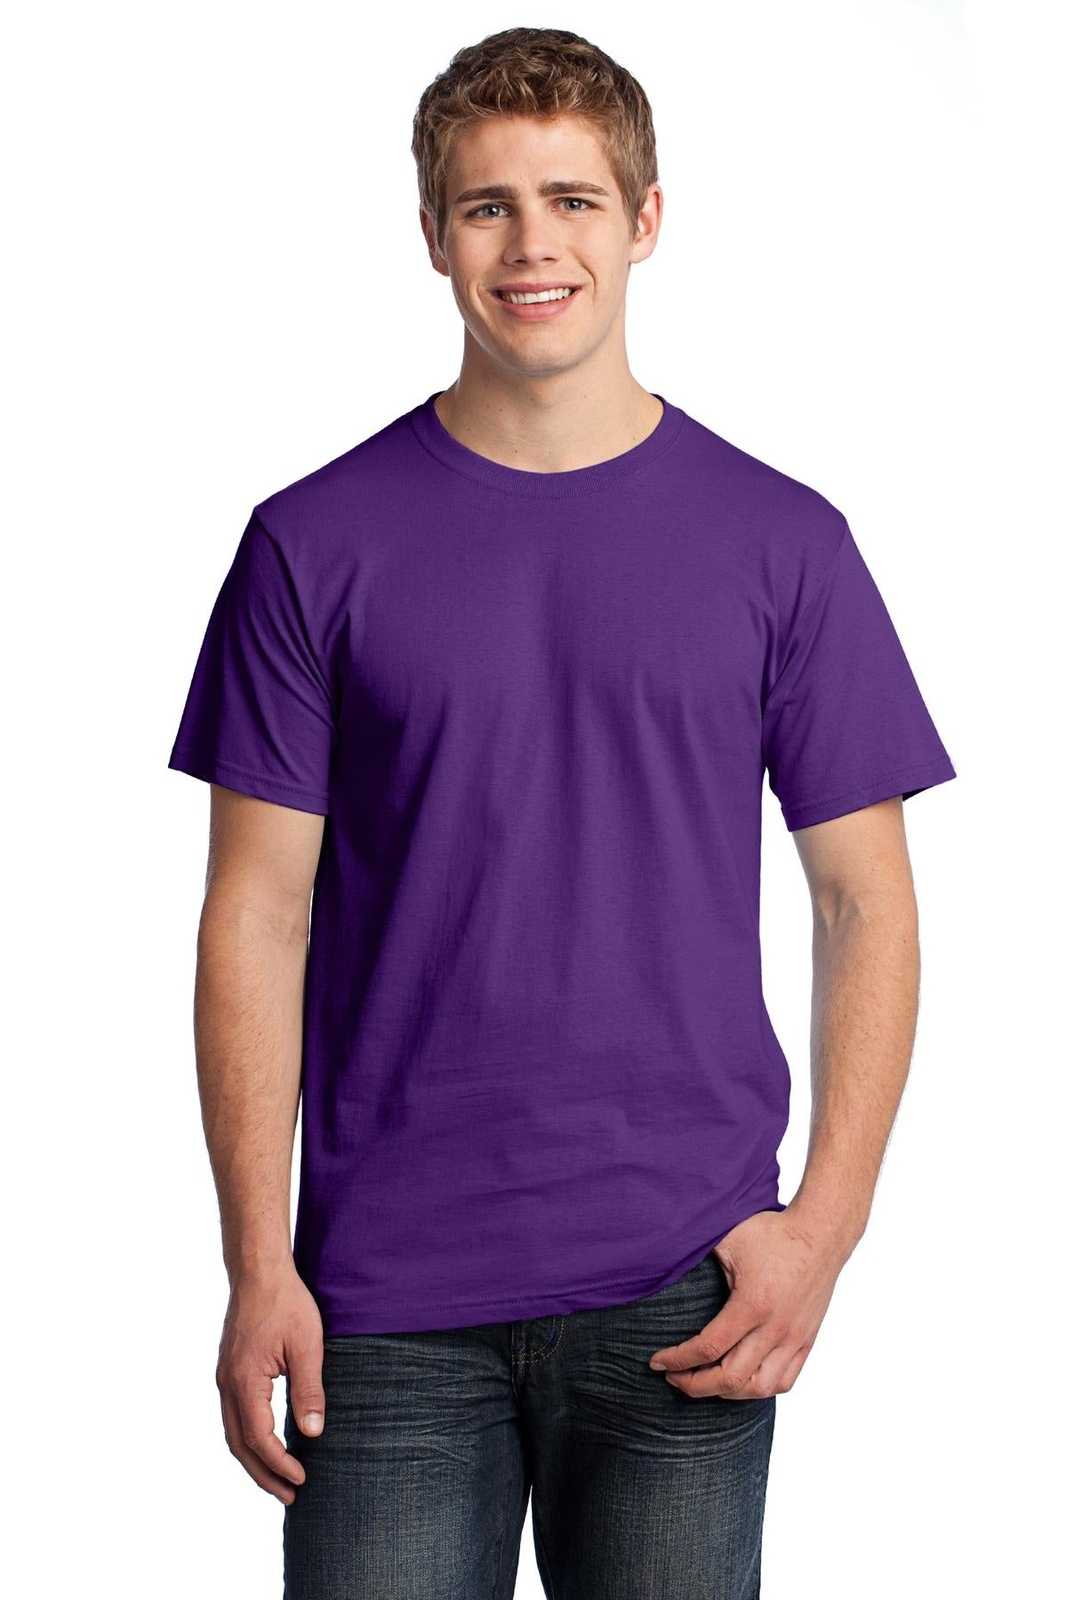 Fruit of the Loom 3930 HD Cotton 100% Cotton T-Shirt - Purple - HIT a Double